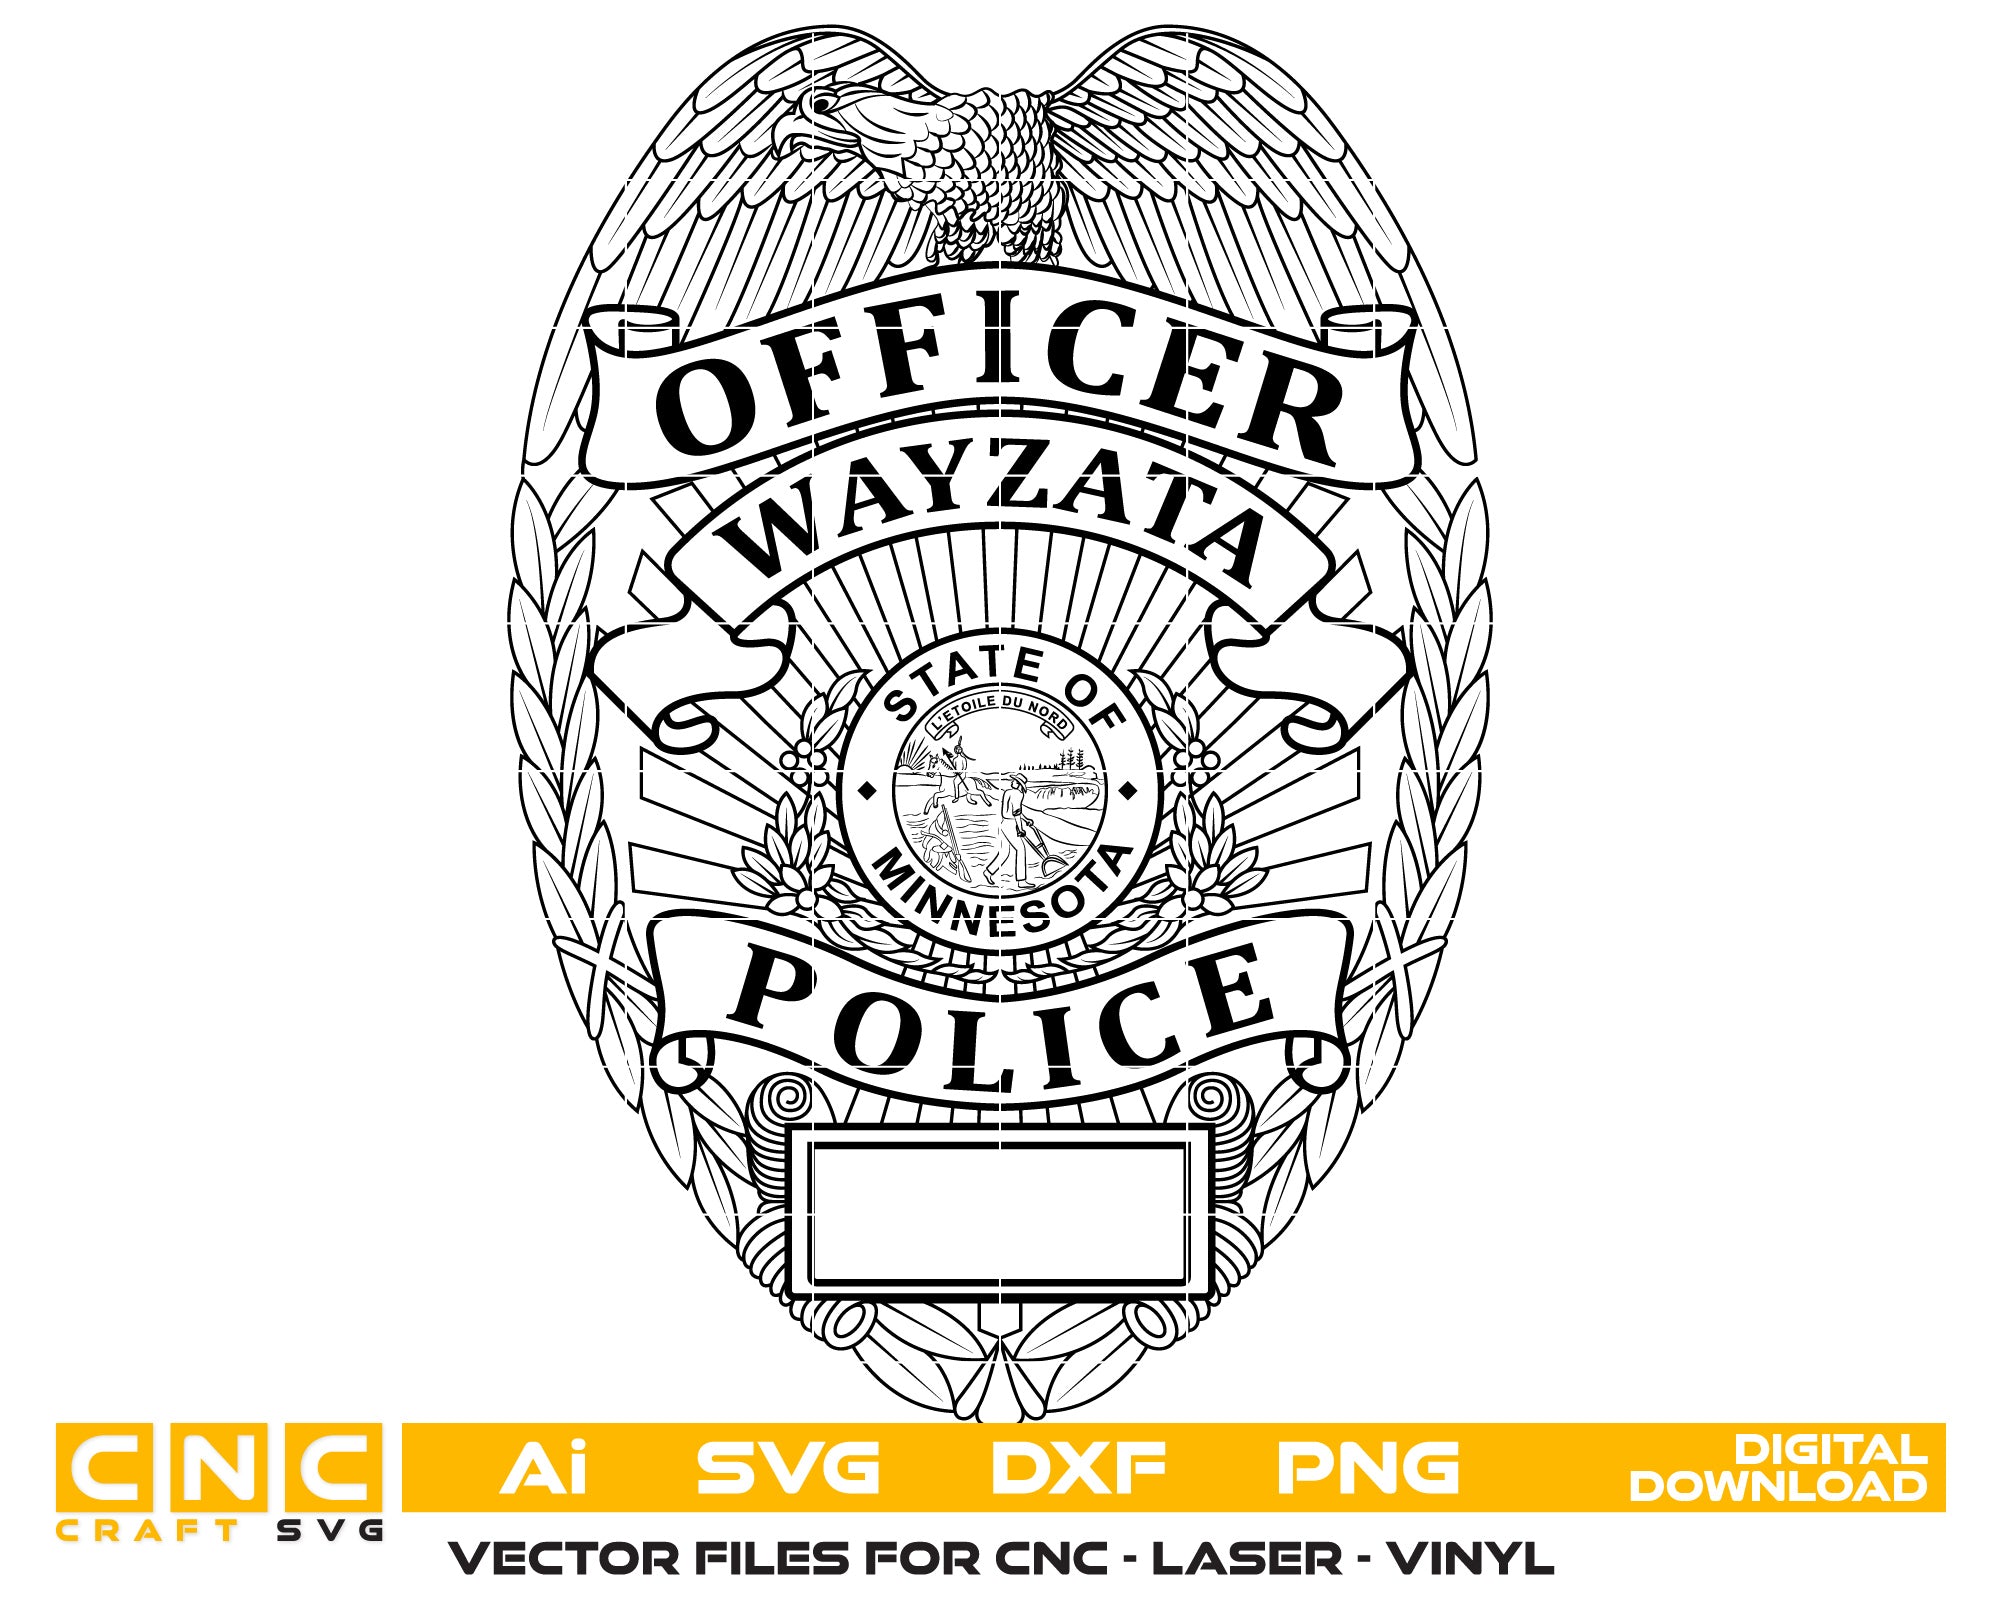 Wayzata Police Officer Badge Vector Art, Ai,SVG, DXF, PNG, Digital Files